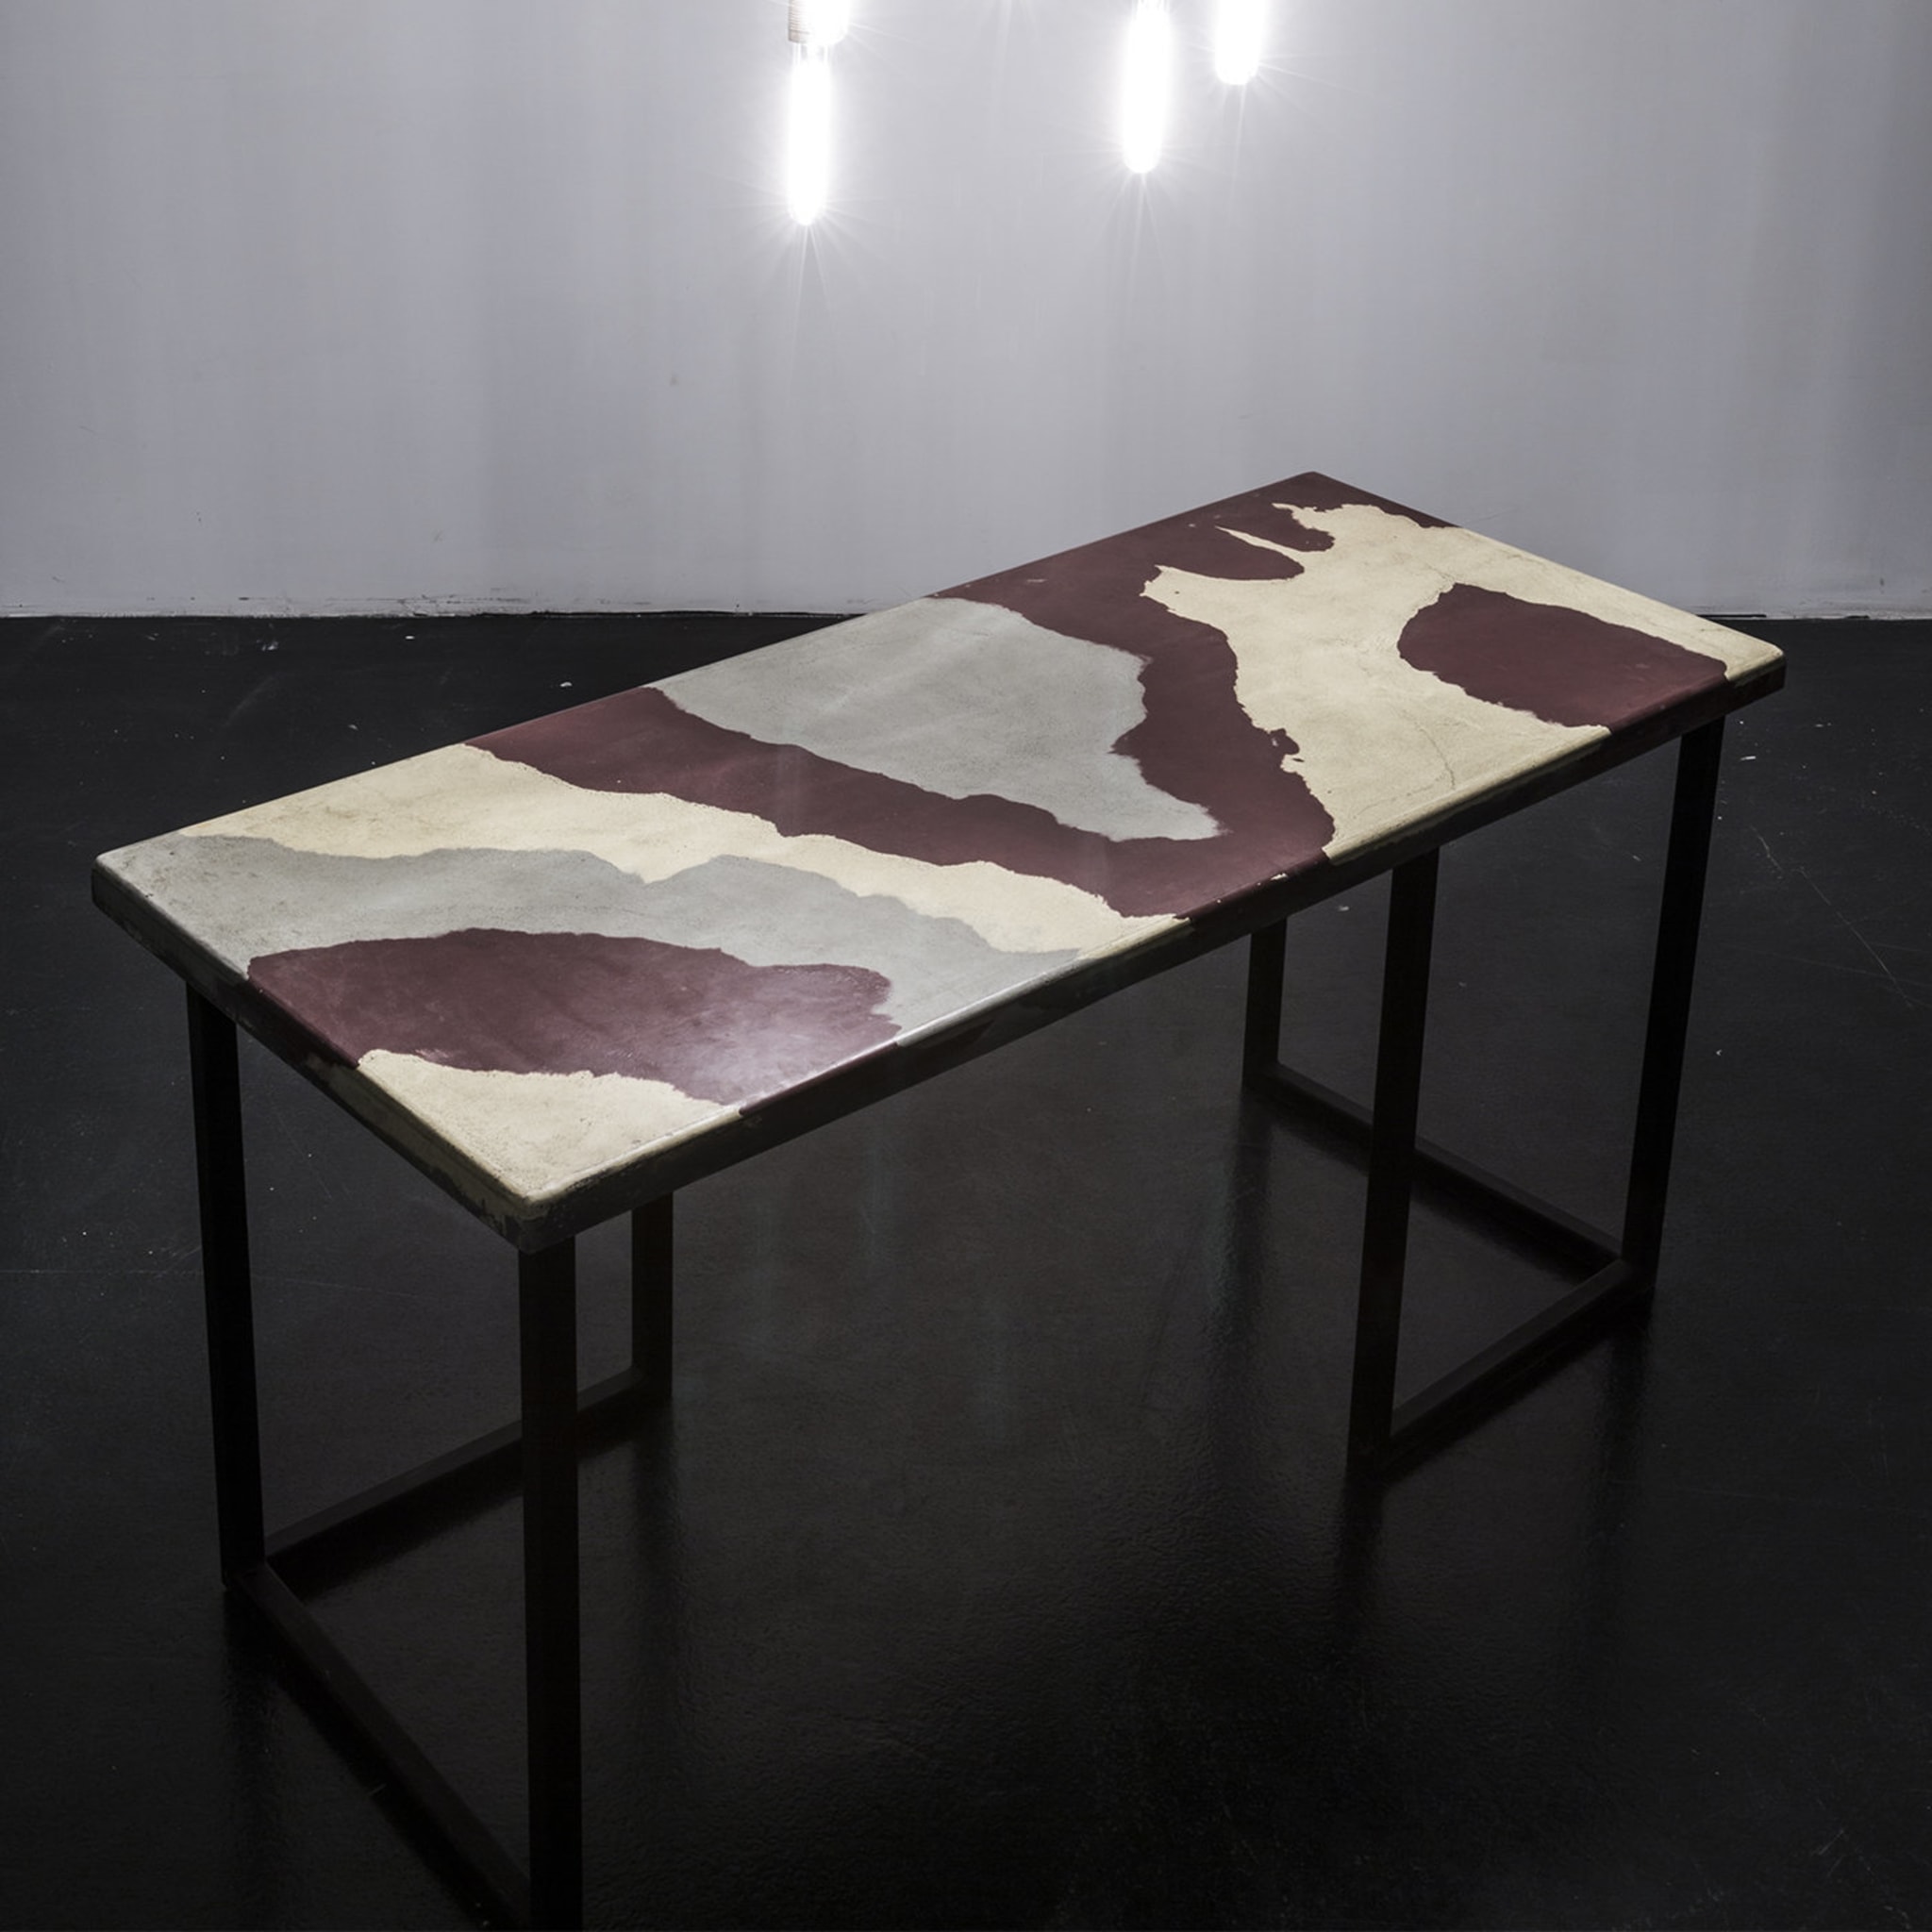 Jackson P. Modular Table - Alternative view 1